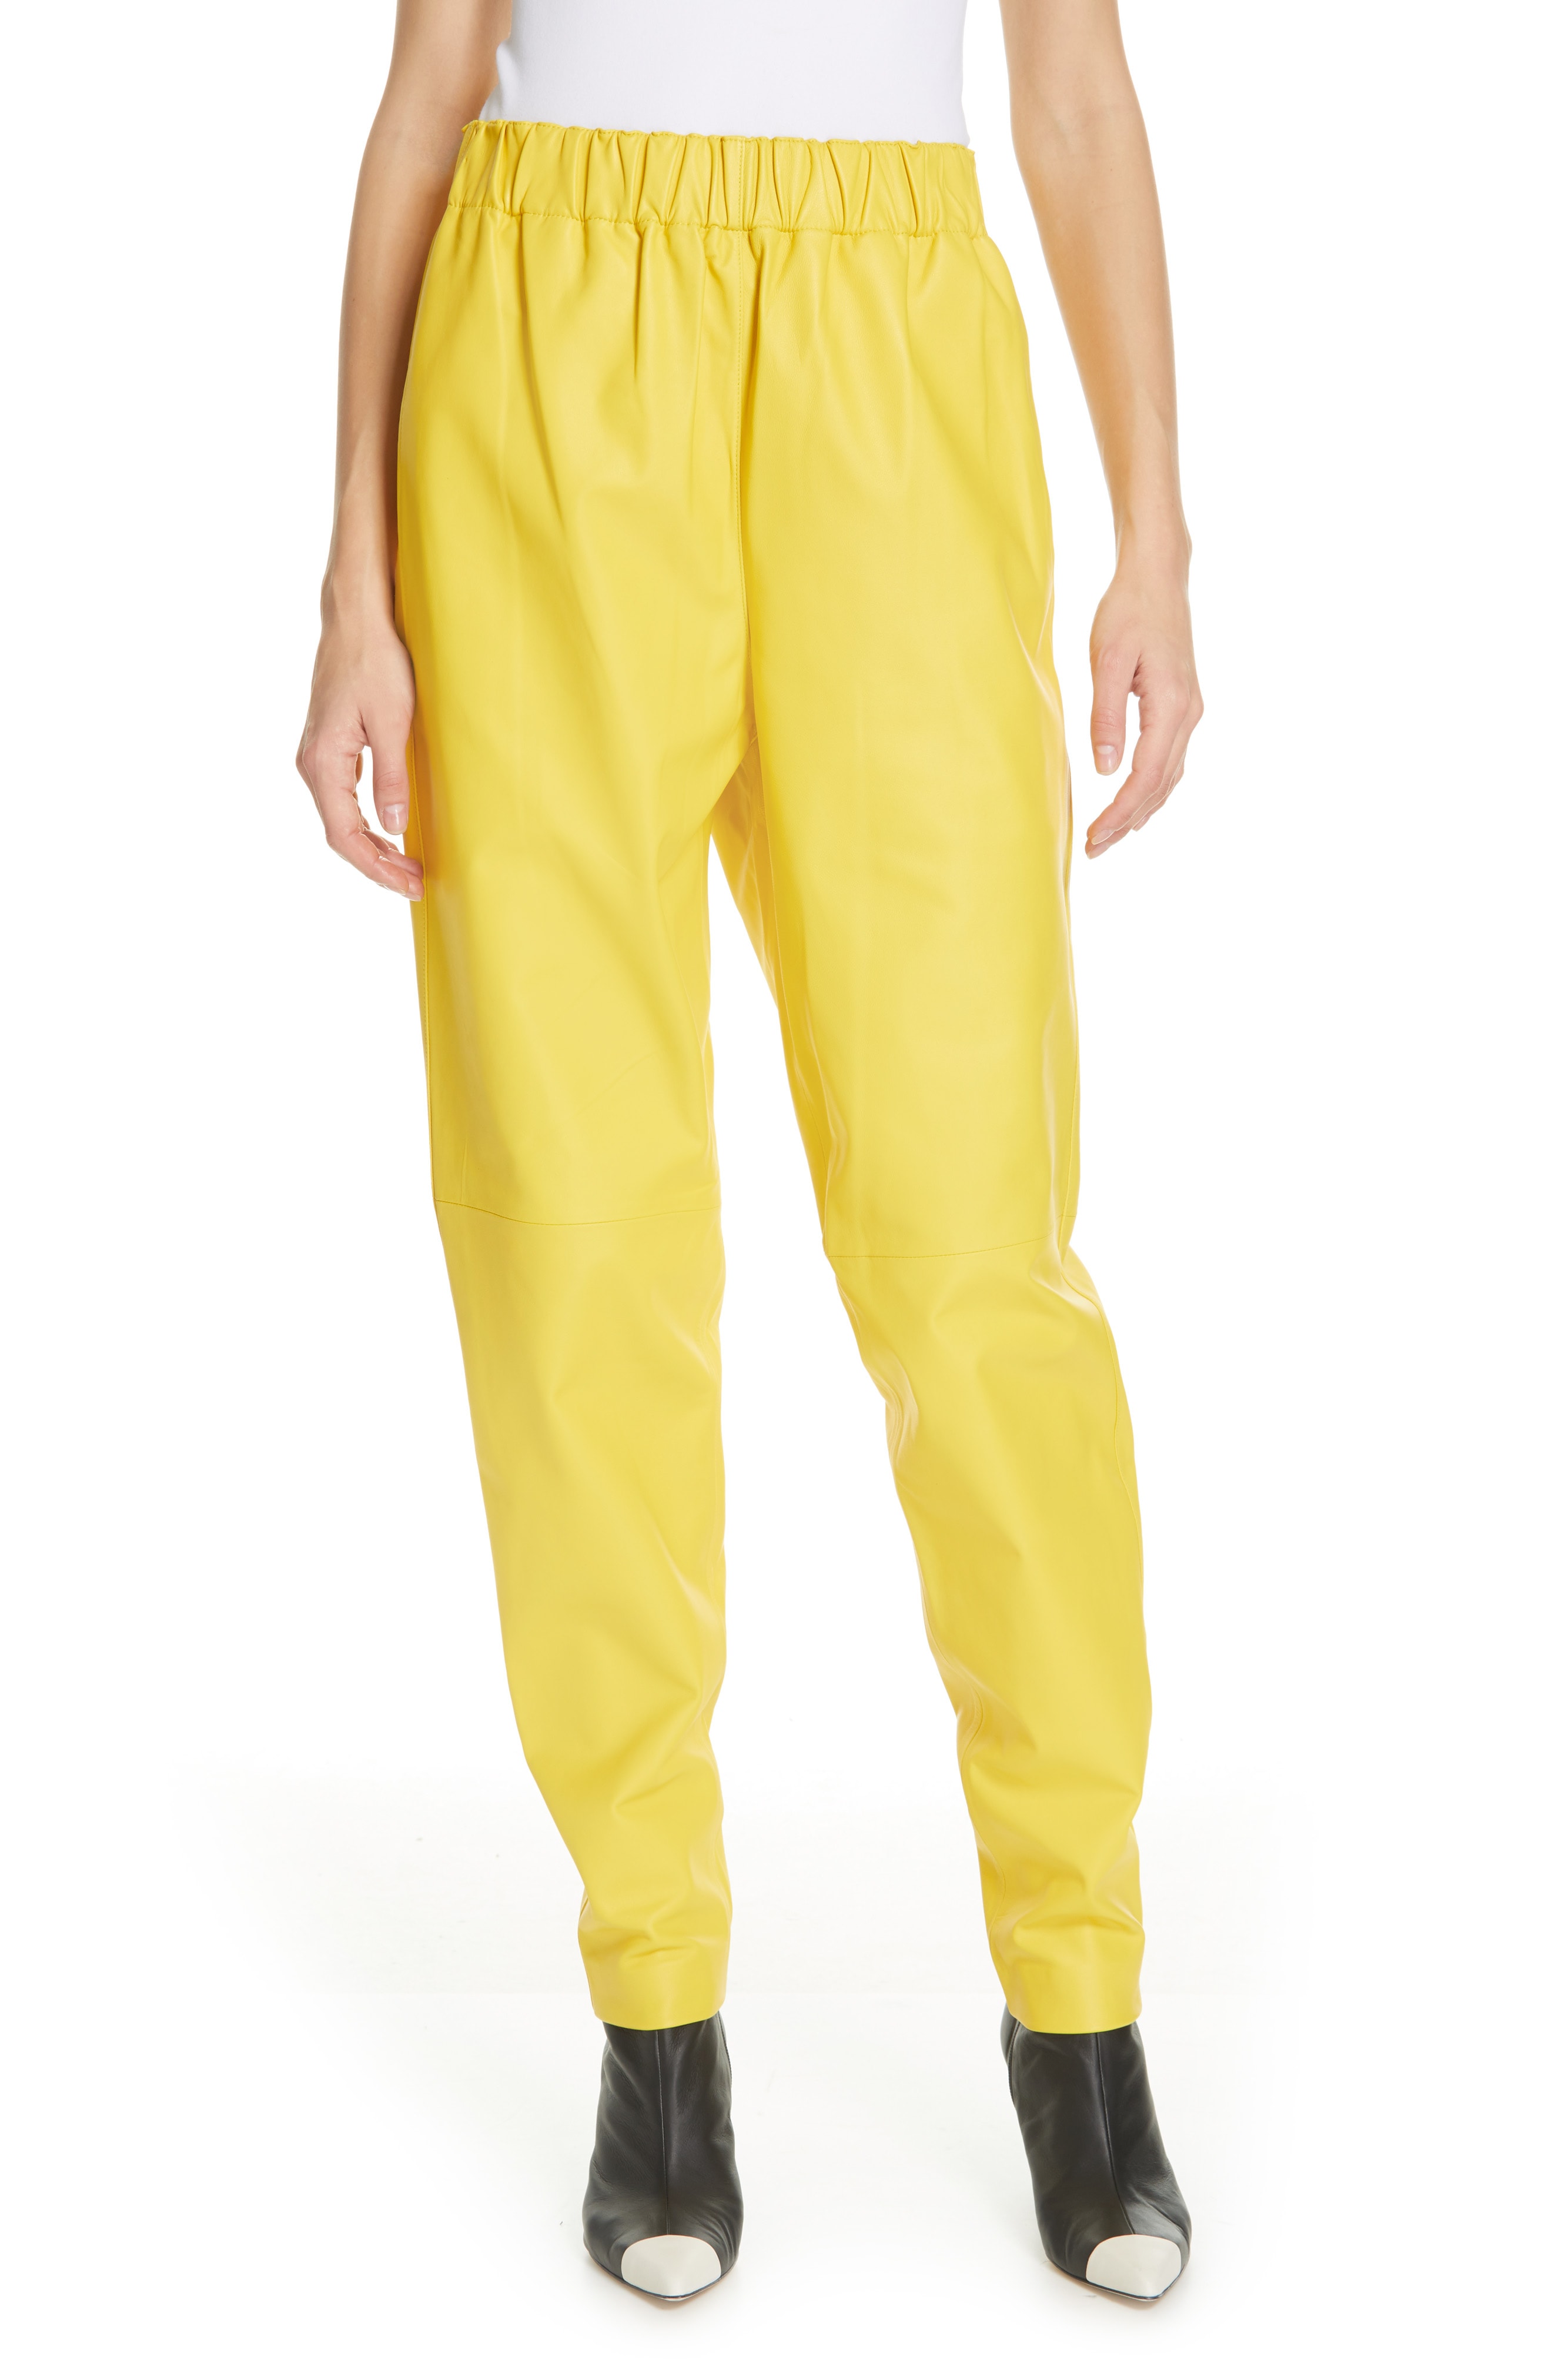 yellow pants for women | Nordstrom